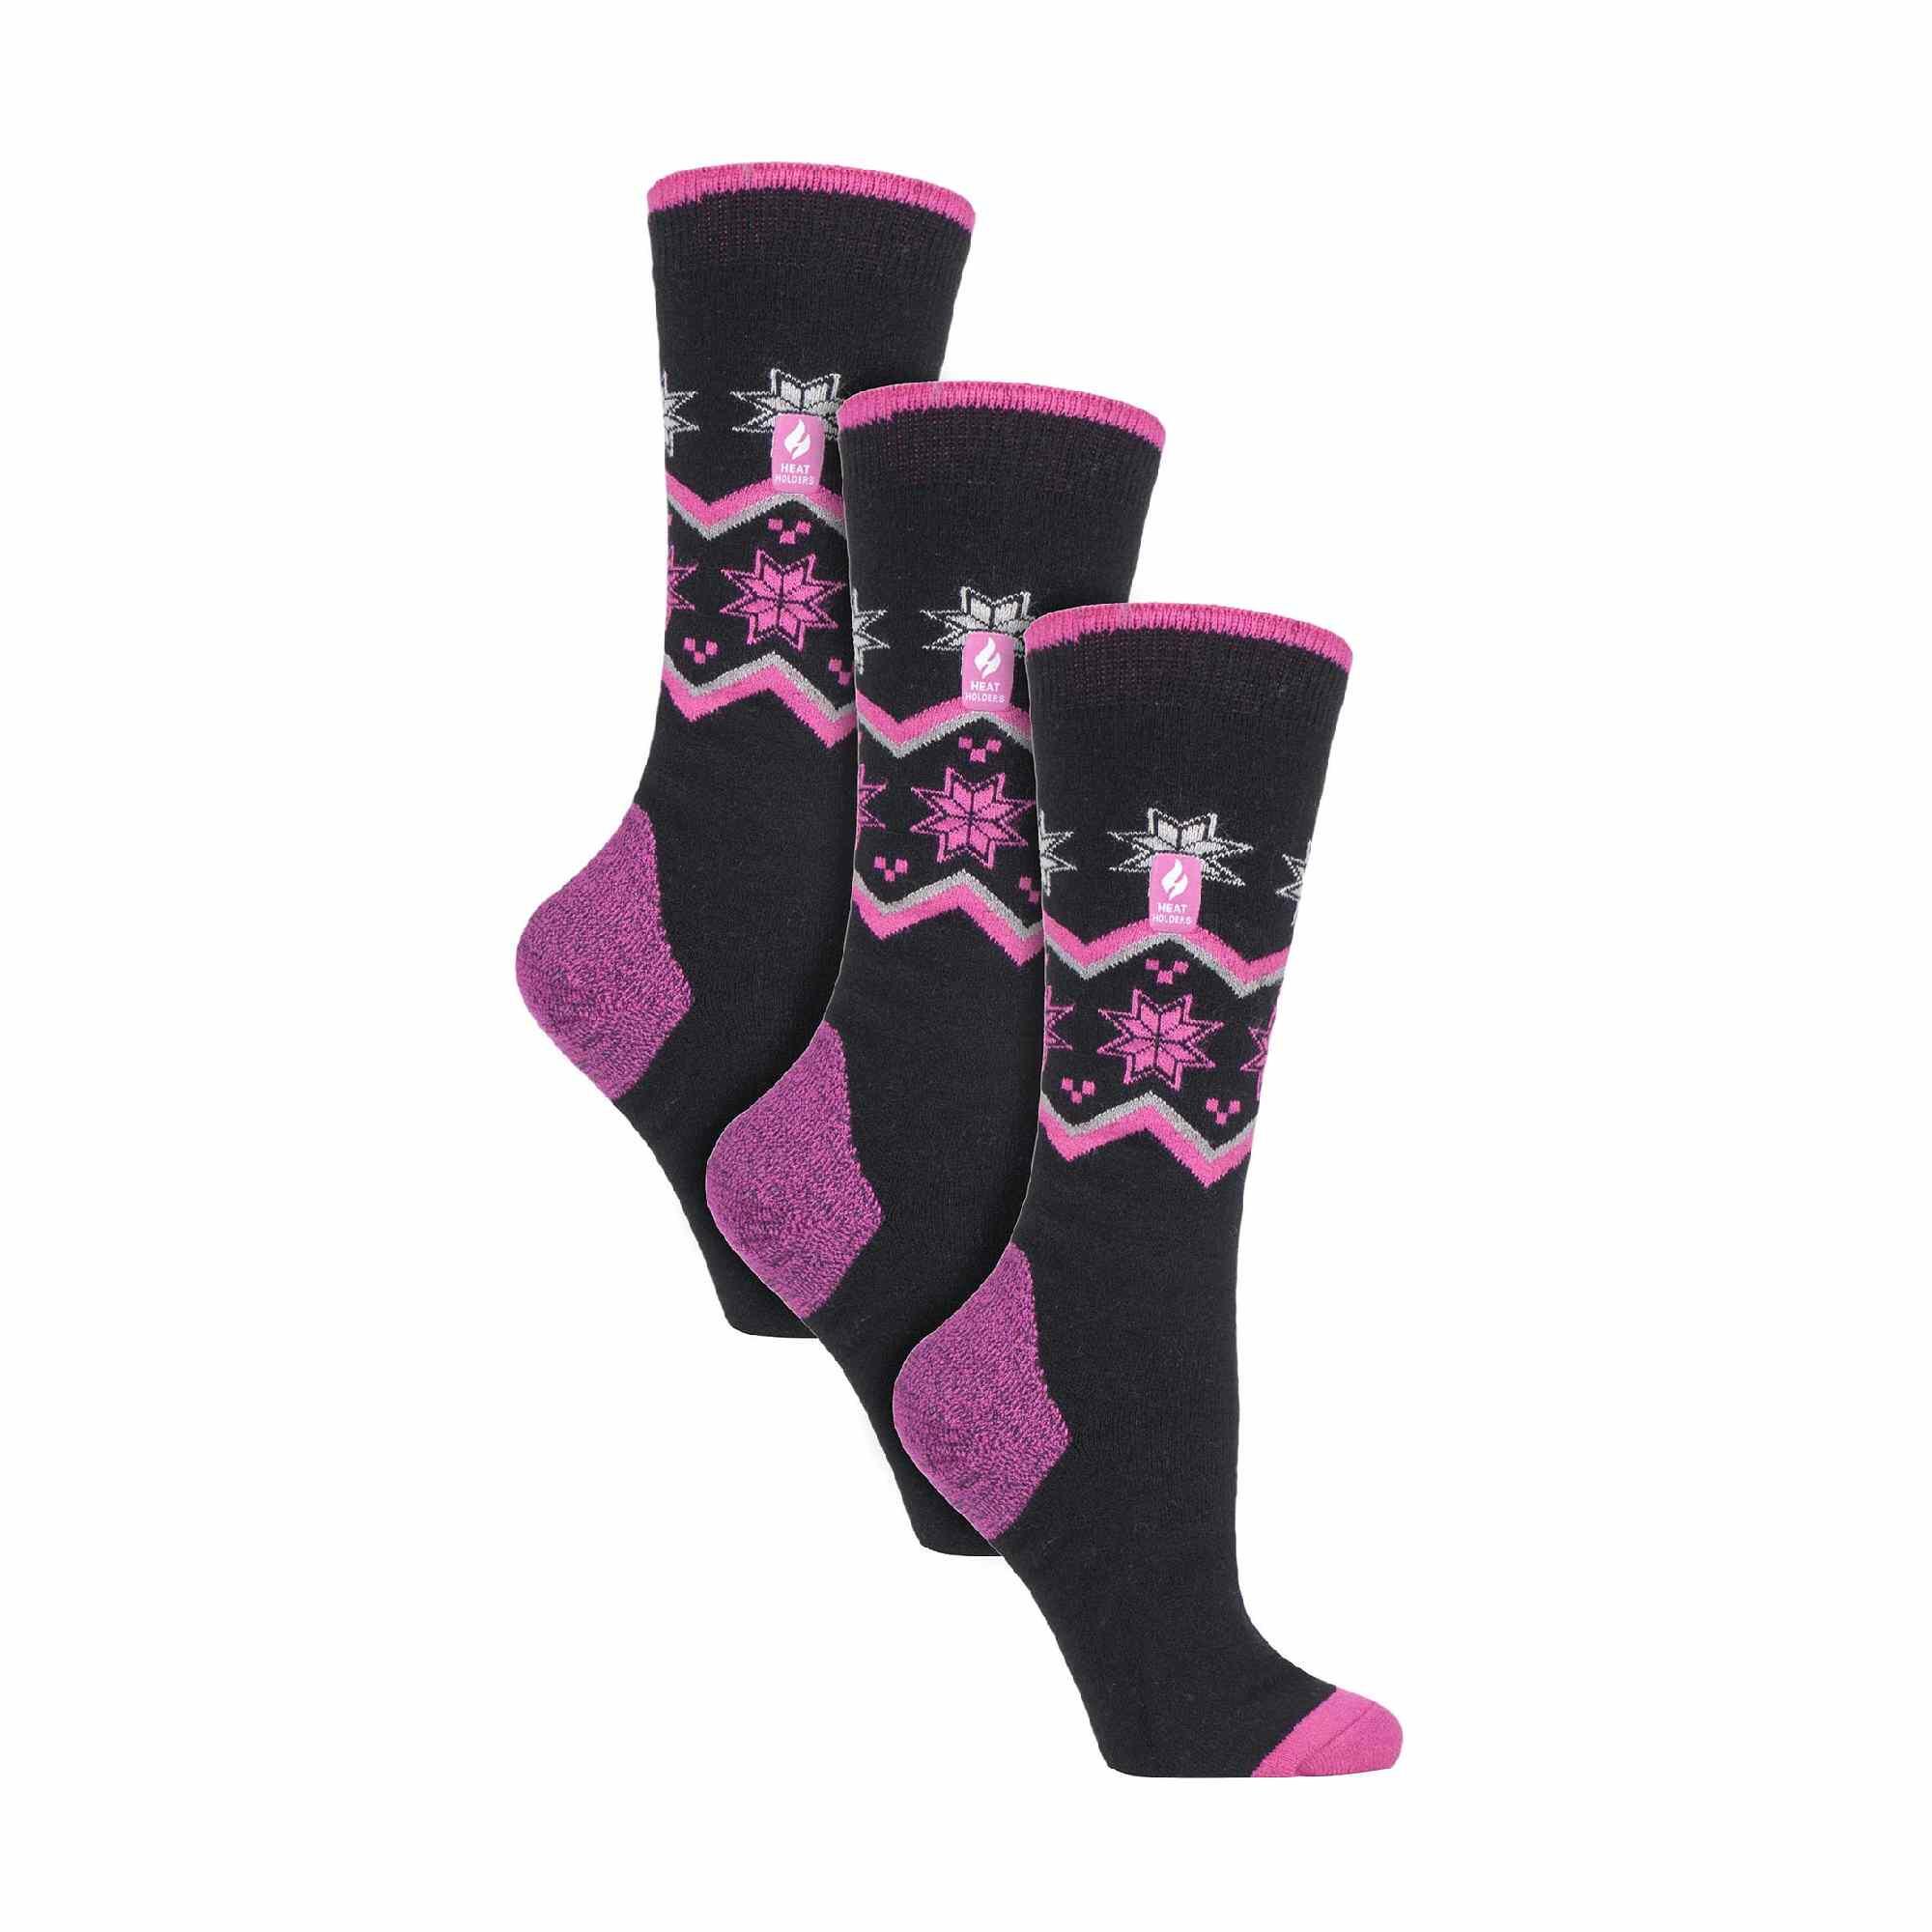 HEAT HOLDERS 3 Pack Ladies Patterned Lightweight Thin 1.0 TOG Thermal Knee High Ski Socks